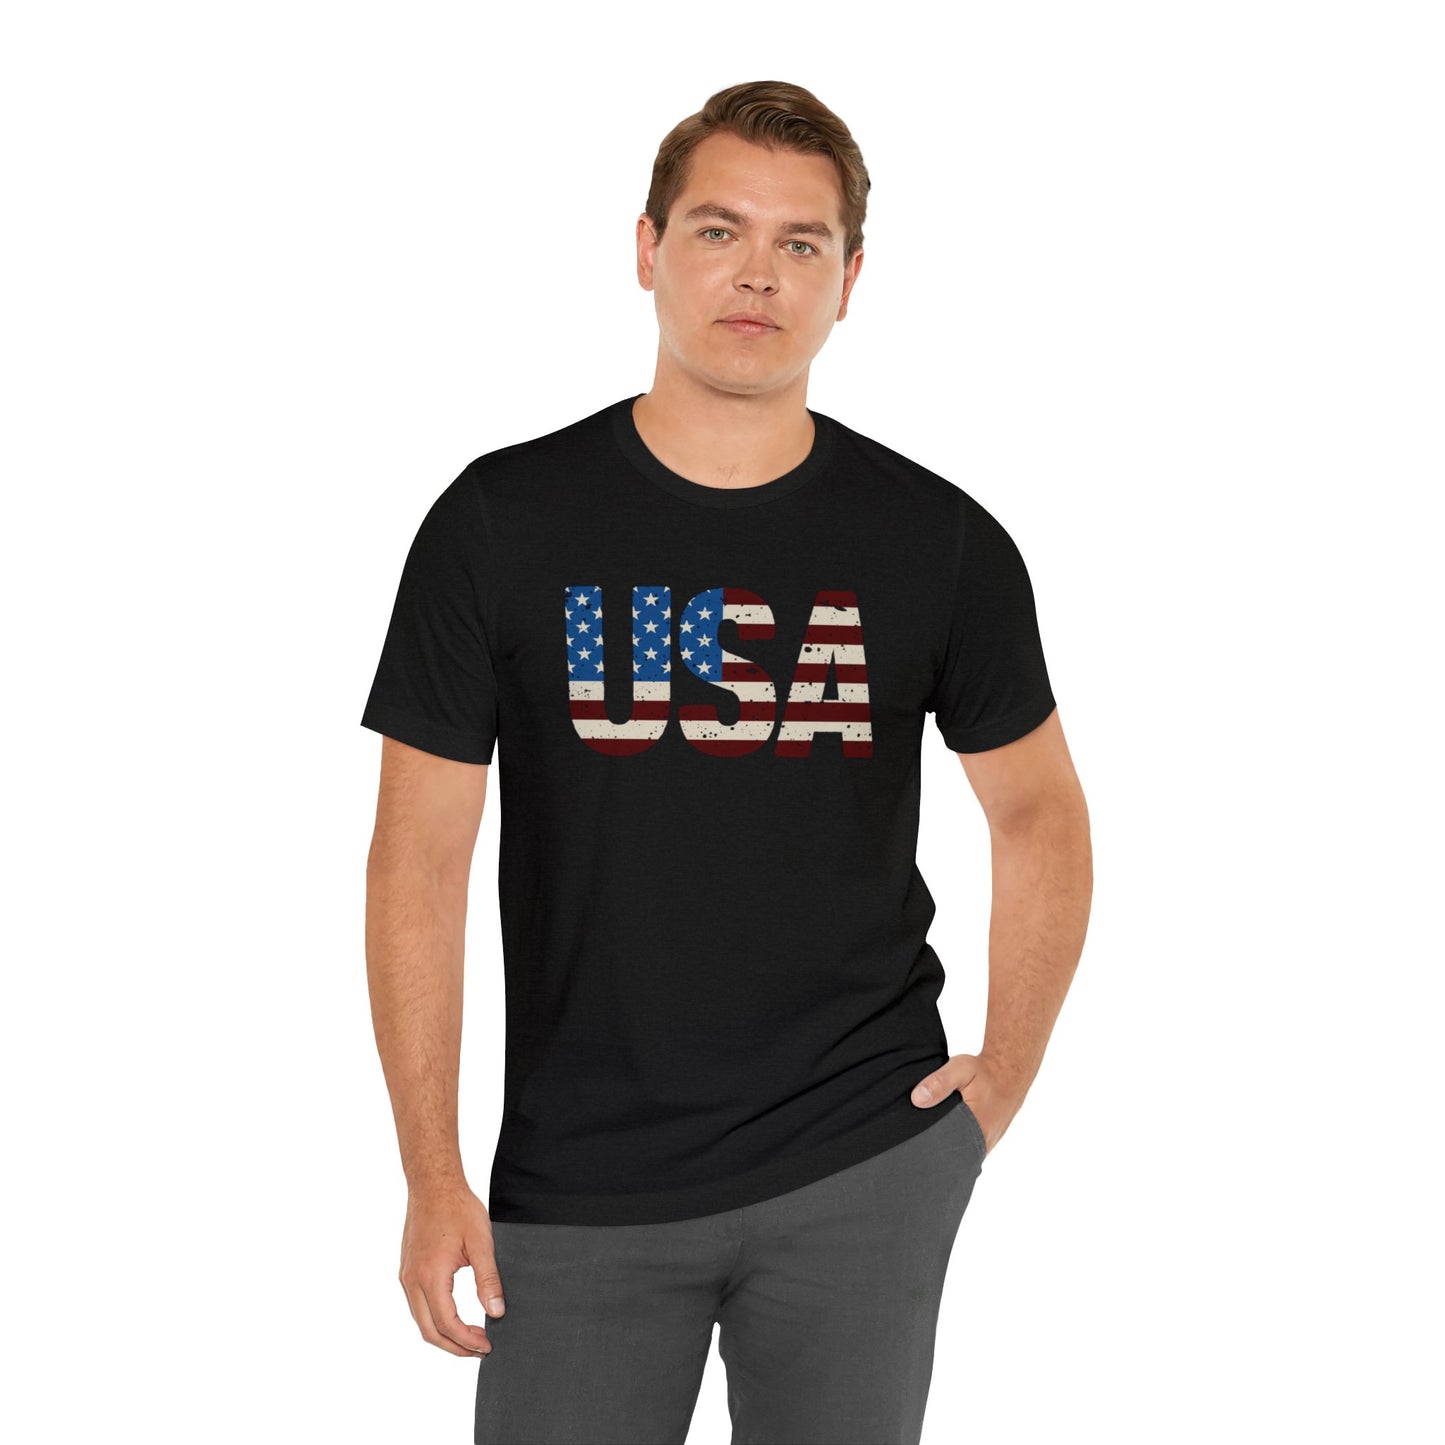 USA Adult Unisex Tshirt